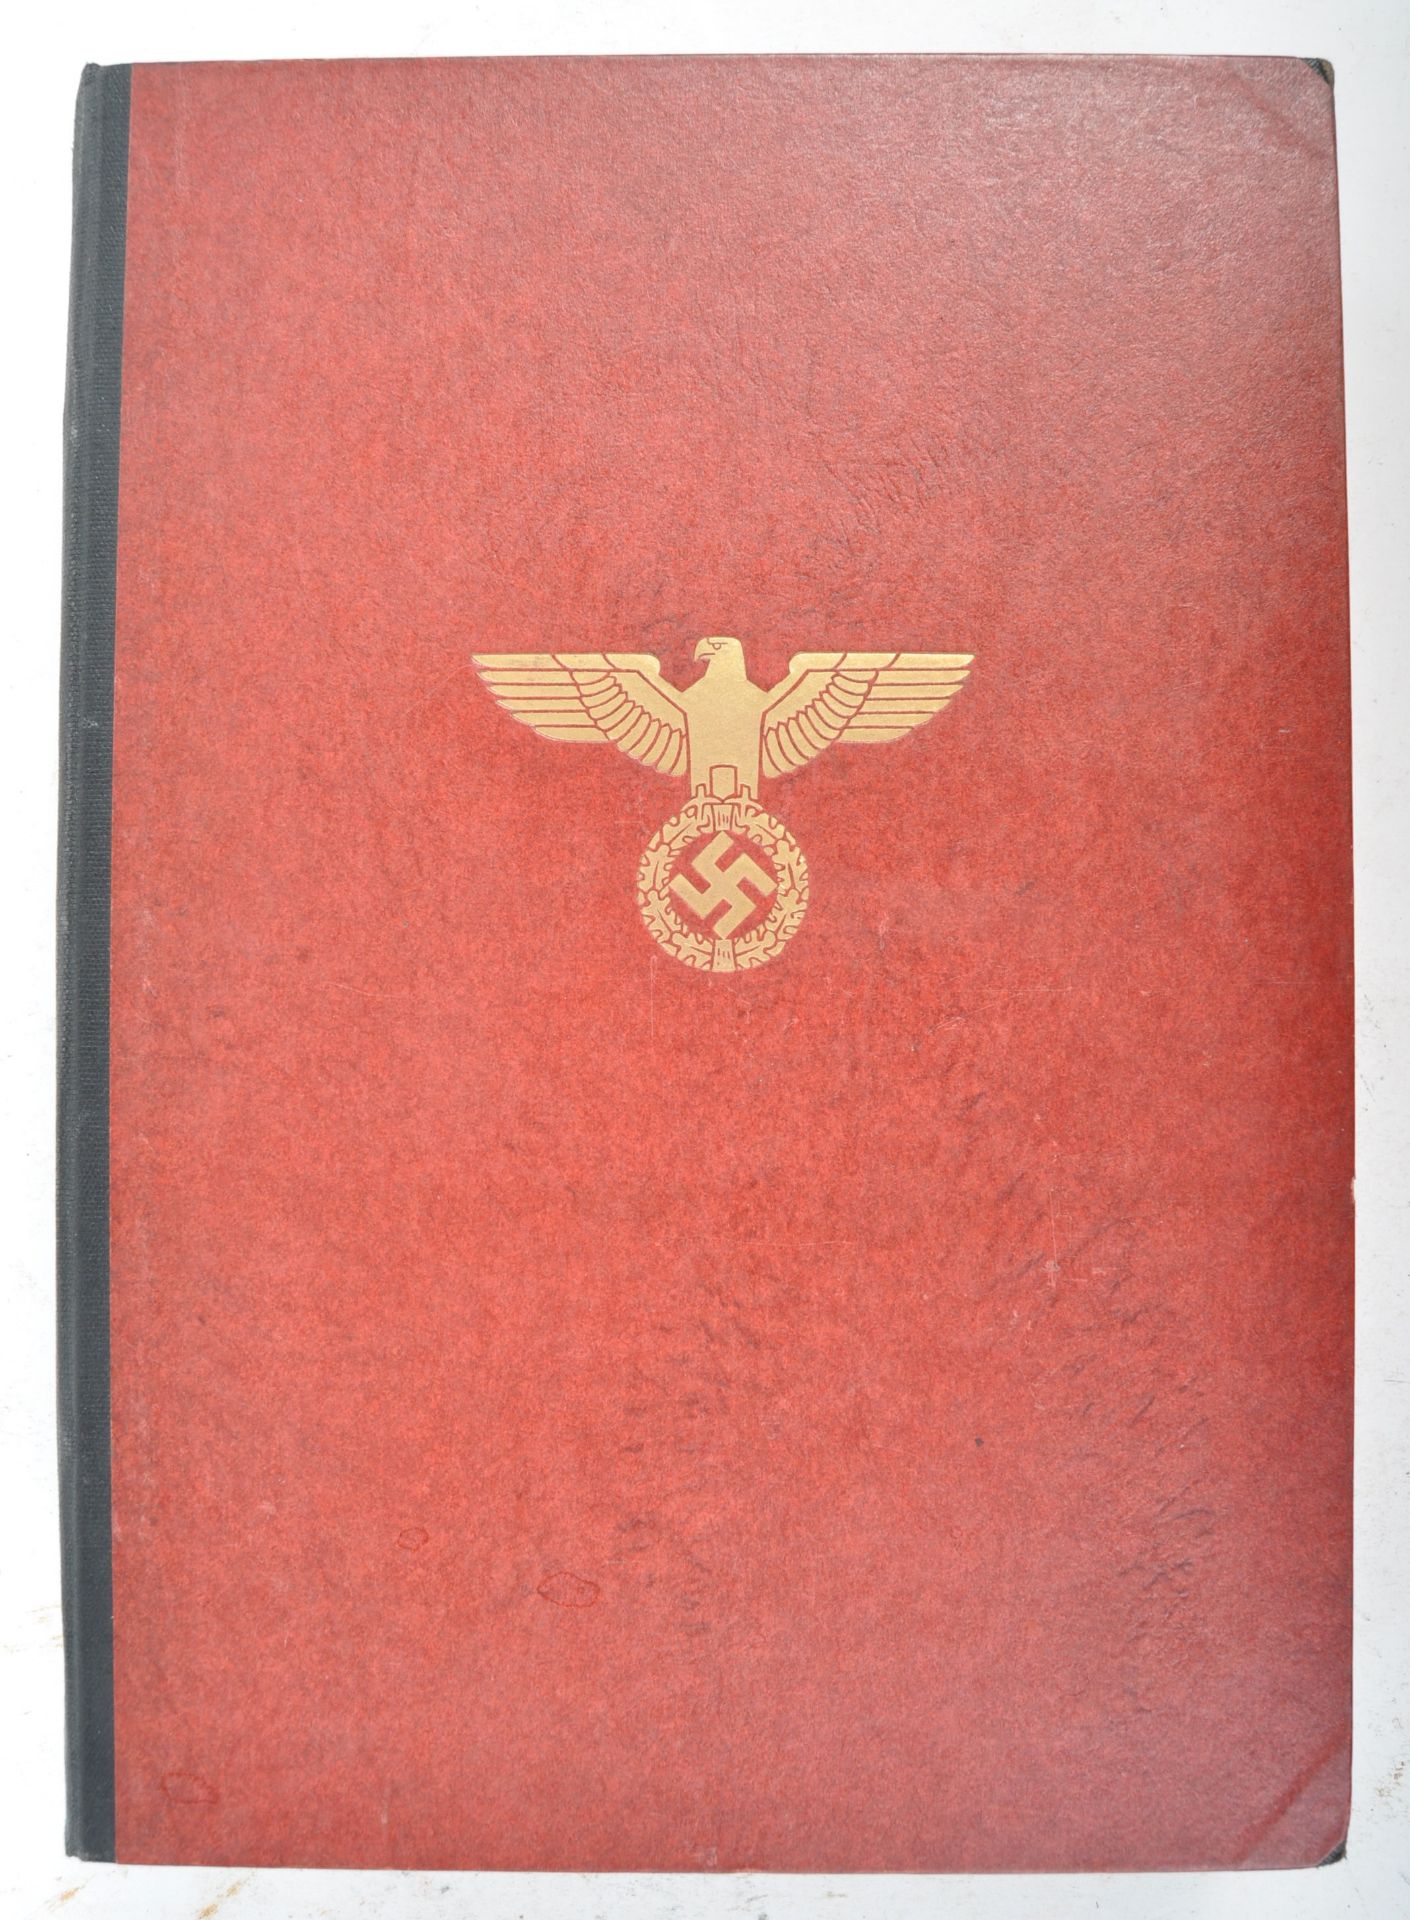 LARGE ORIGINAL 1936 GERMAN THIRD REICH LAW BOOK